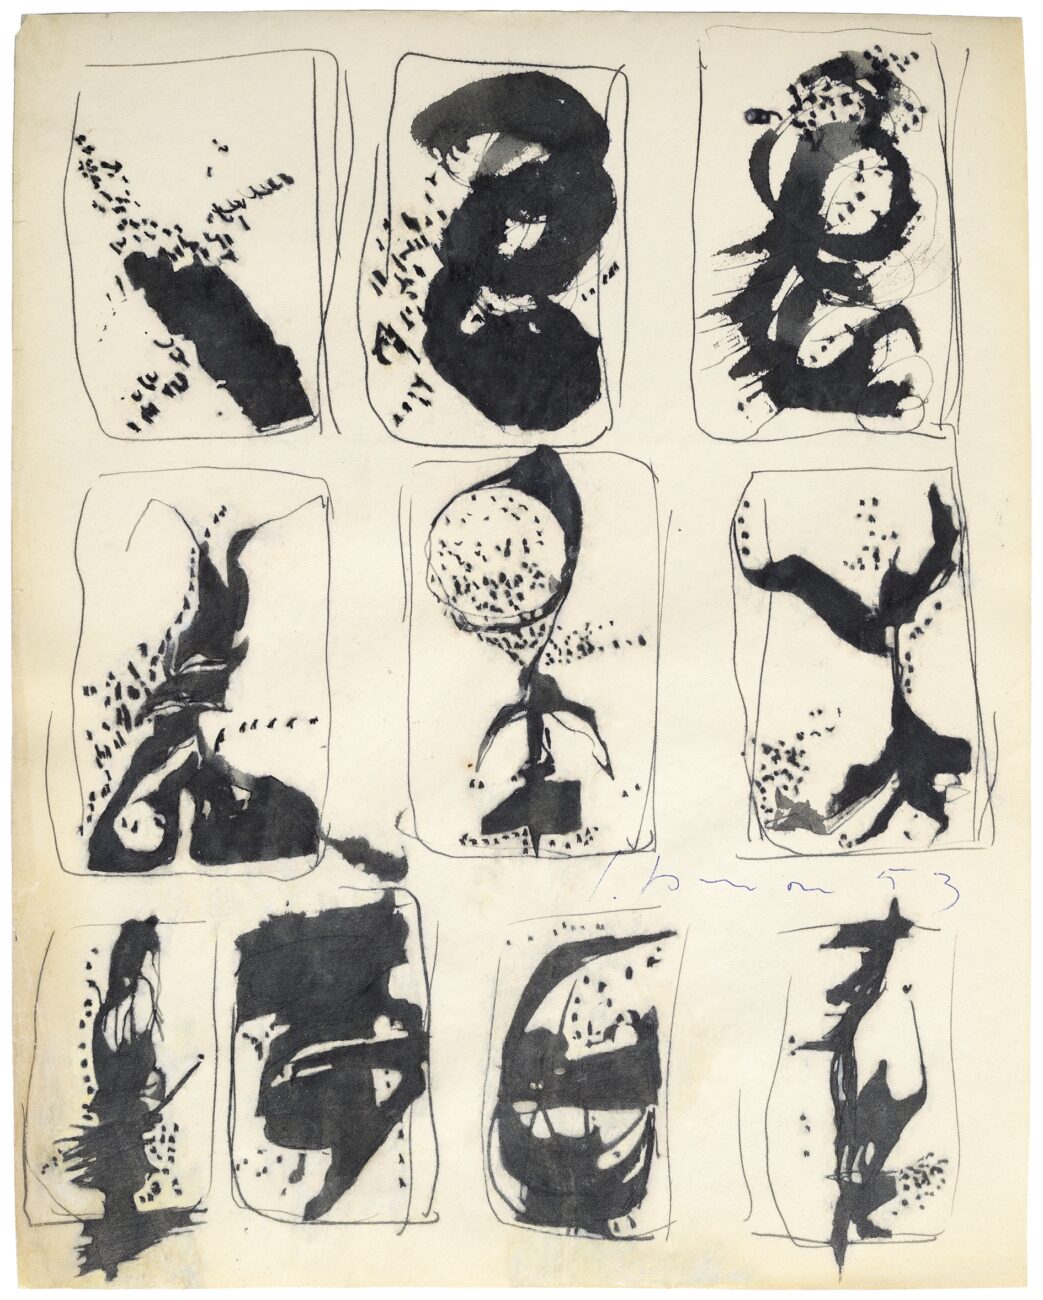 Lucio Fontana, Untitled, Ten Studies for Concetto Spaziale, 1953